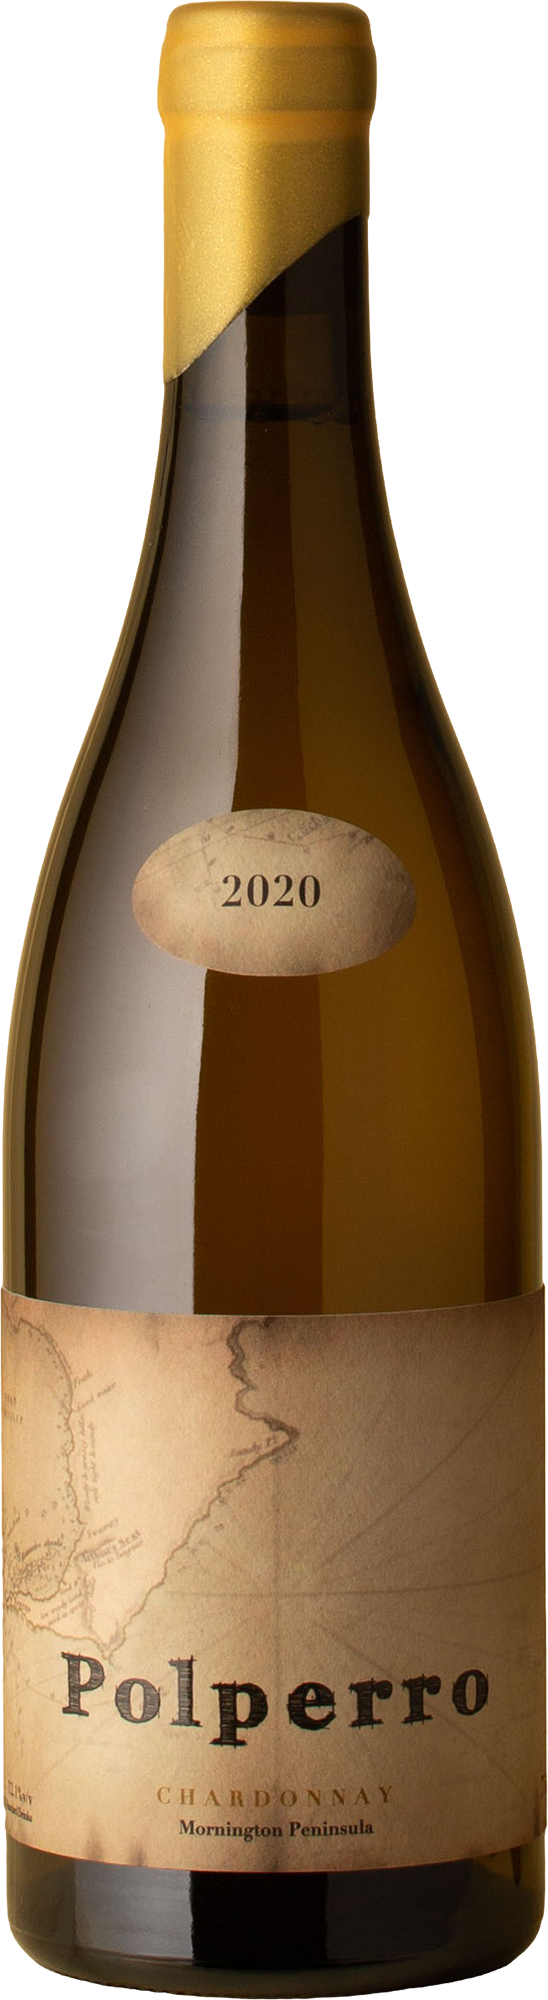 Polperro - Chardonnay 2020 White Wine